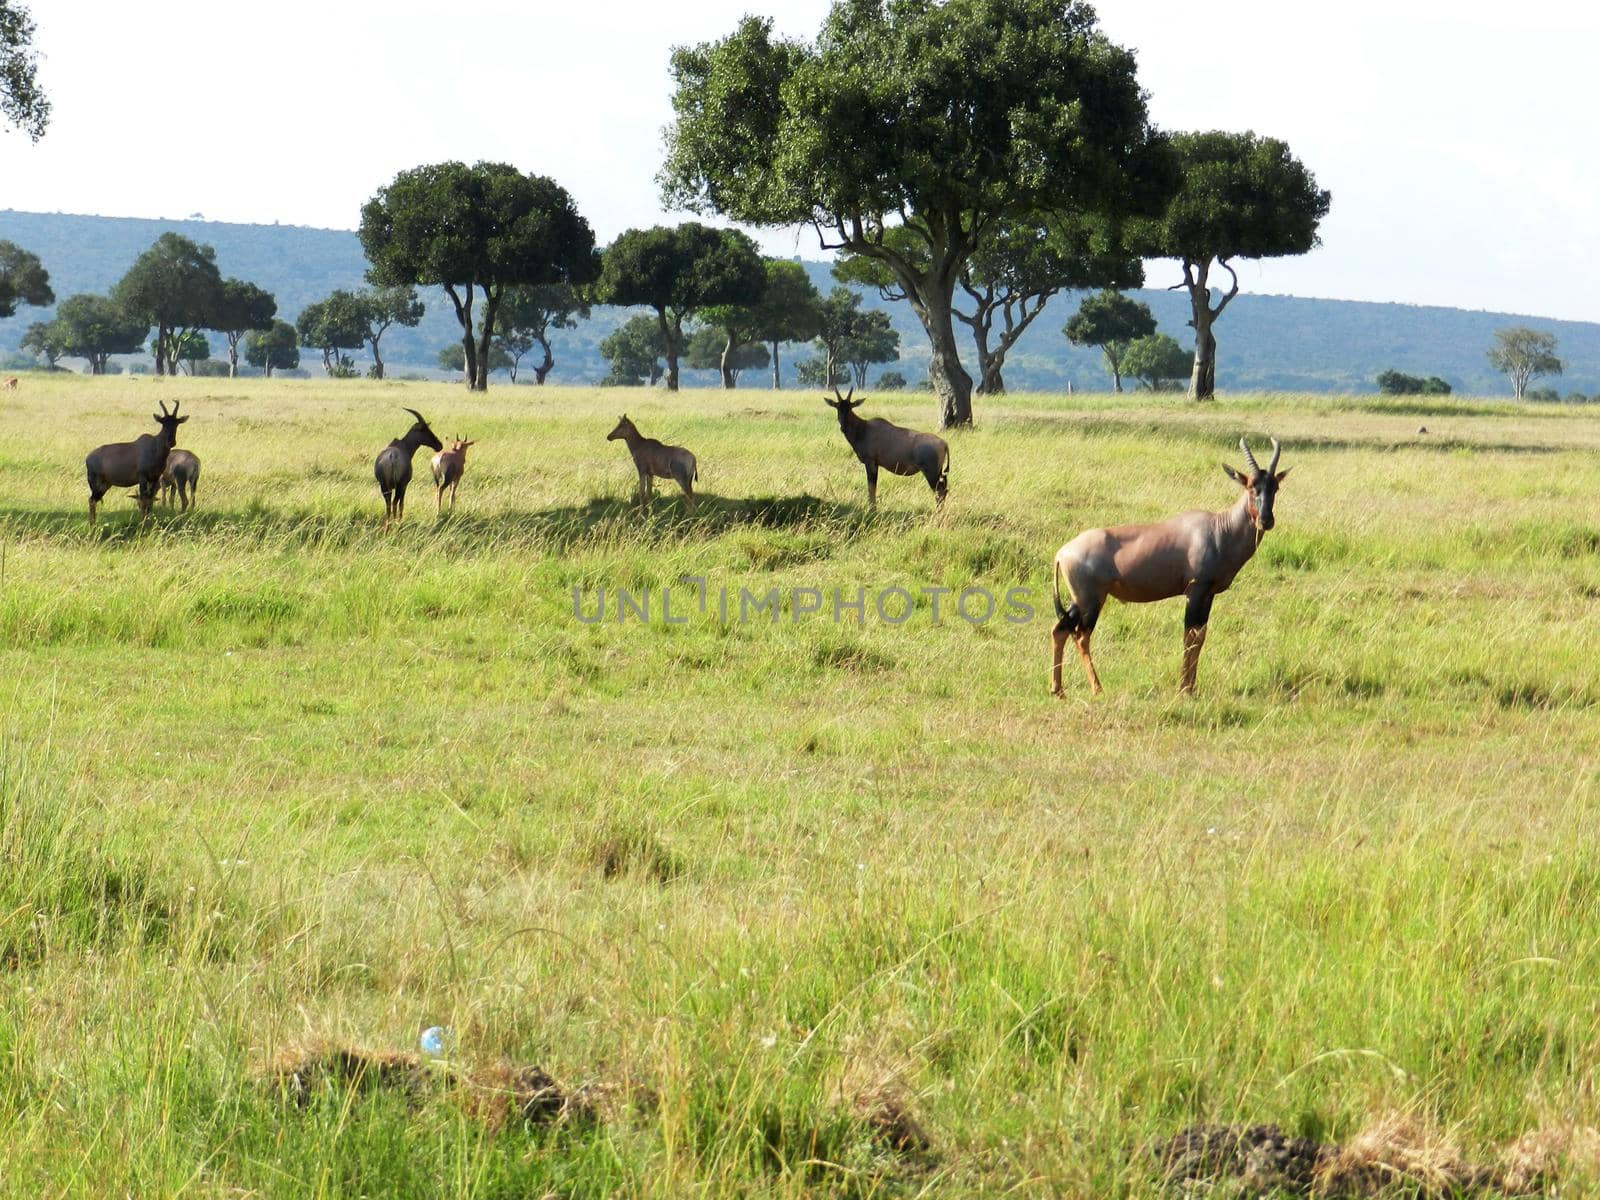 Group of topi antelopes grazing in the African savannah, Kenya